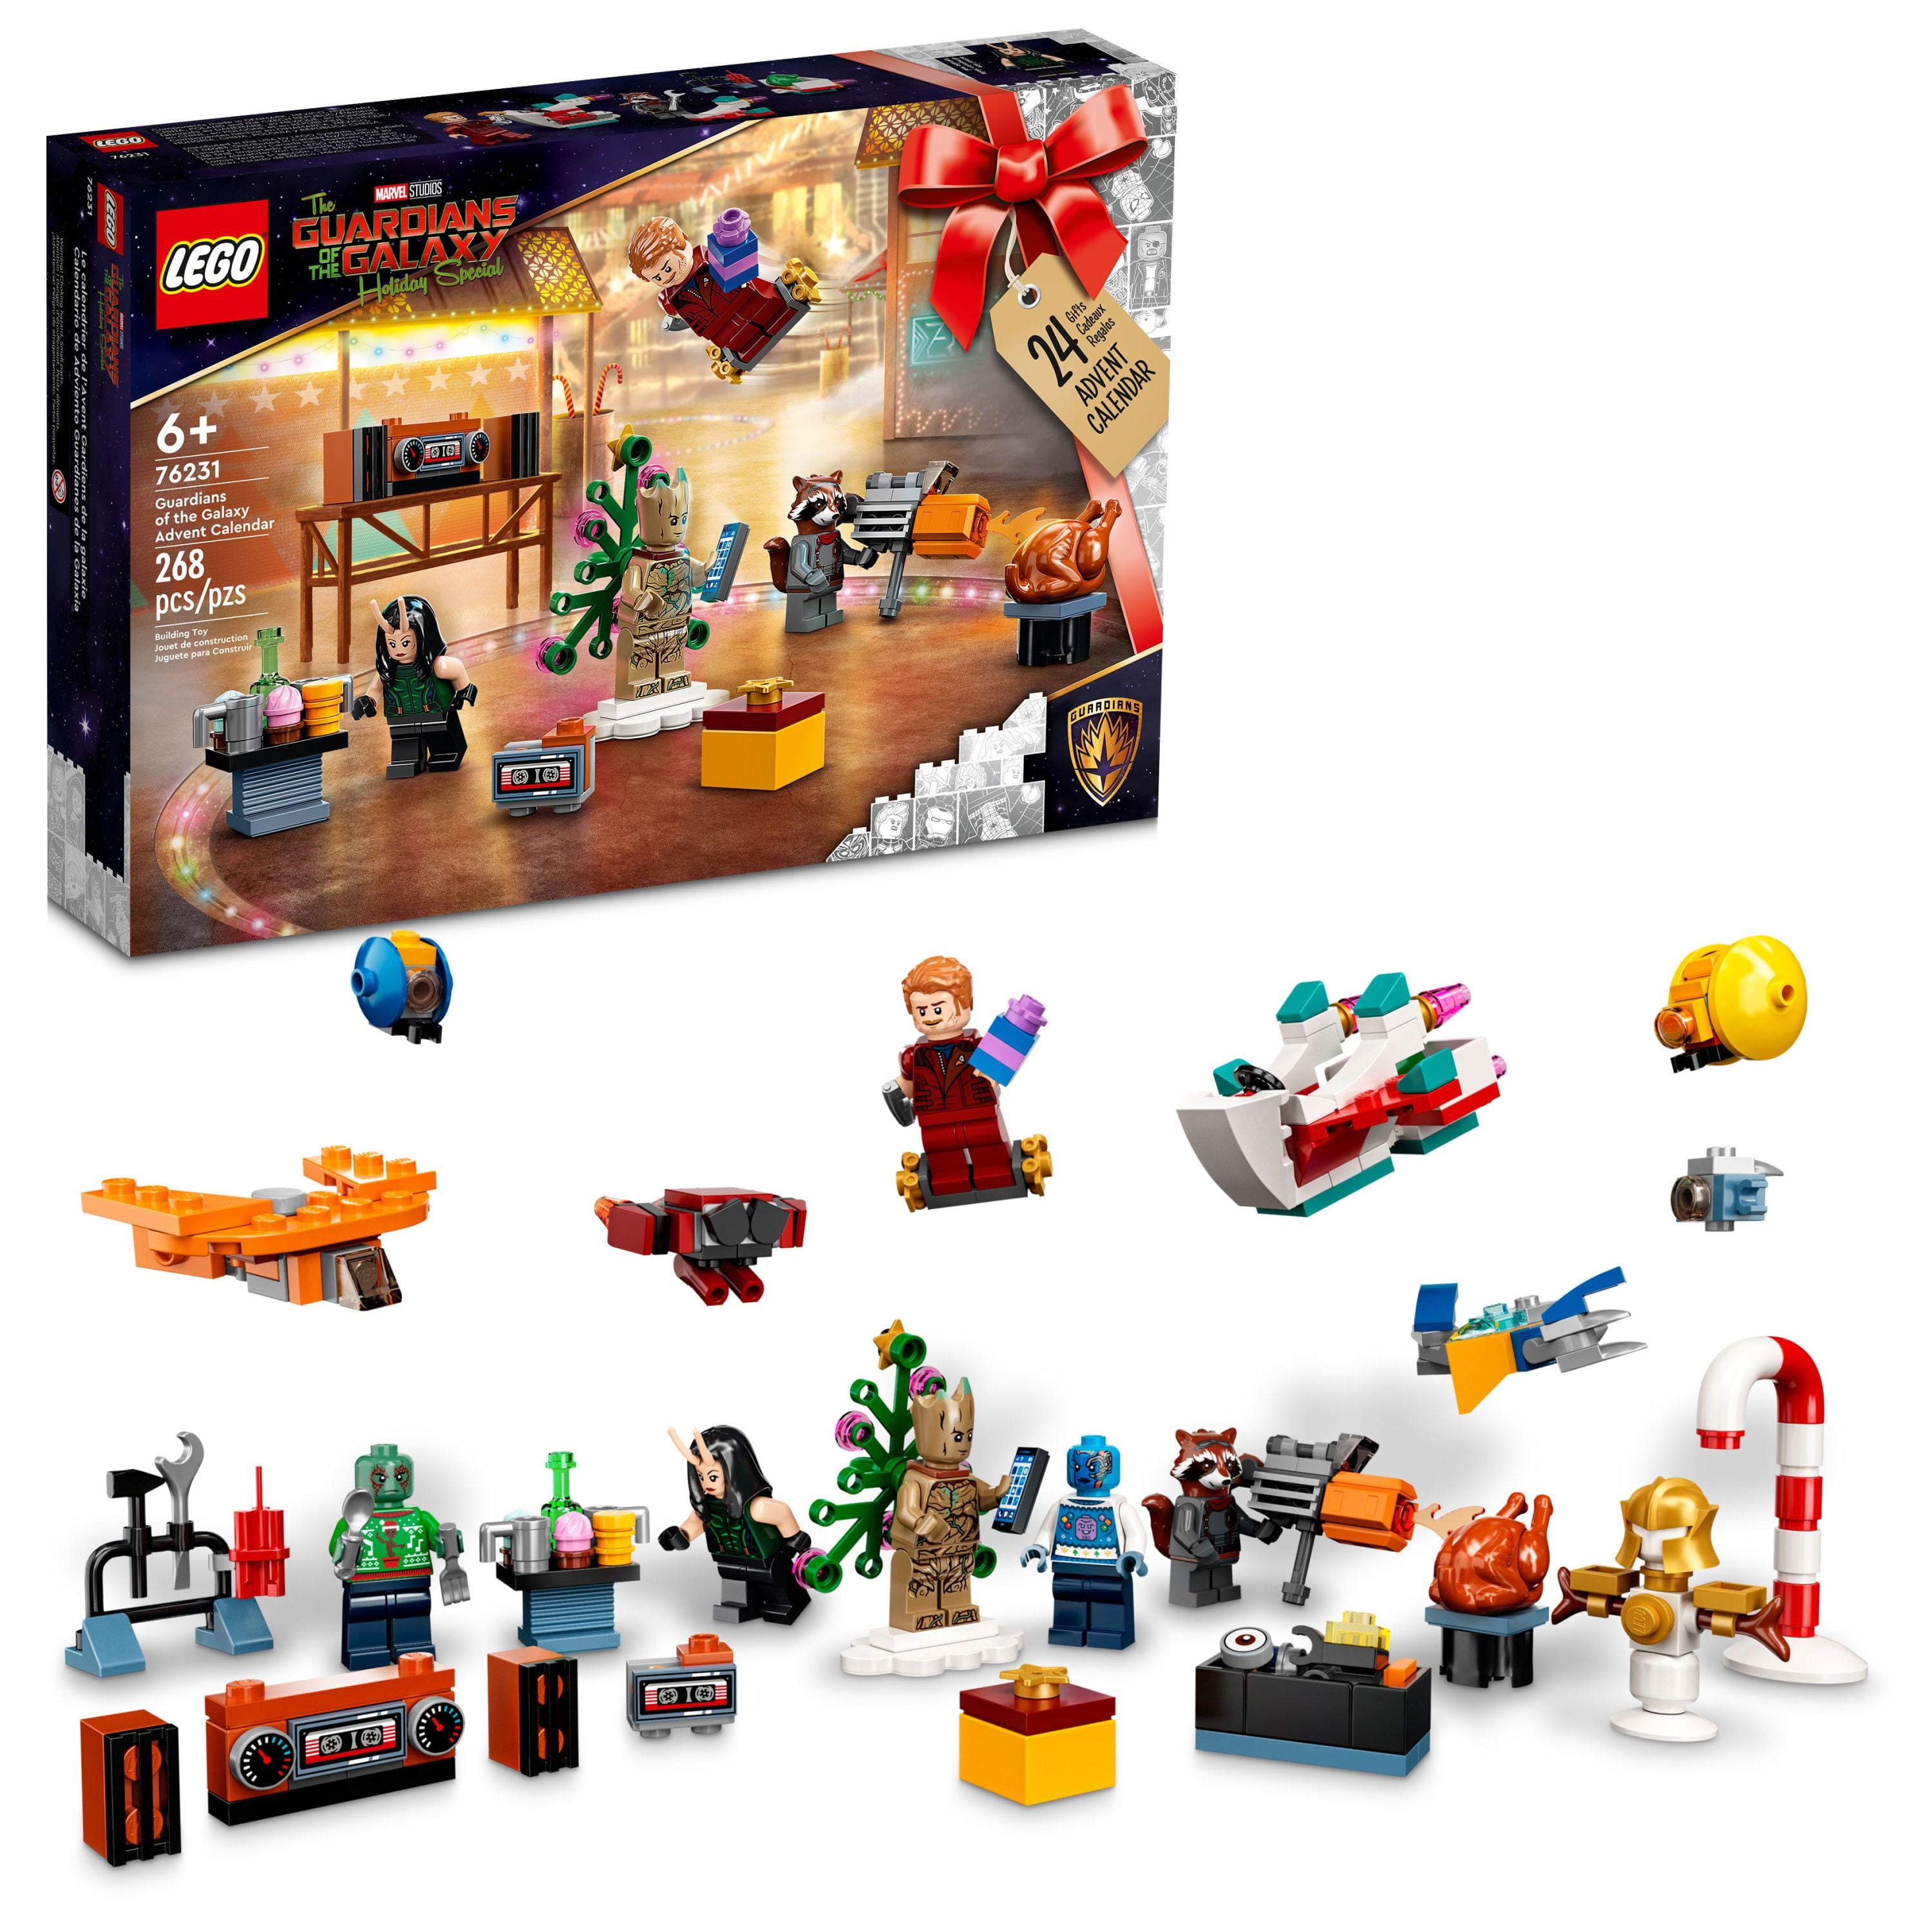 glas Let at læse campingvogn LEGO Marvel Studios' Guardians of the Galaxy 2022 Advent Calendar 76231  Building Toy Set (268 Pieces) - Walmart.com